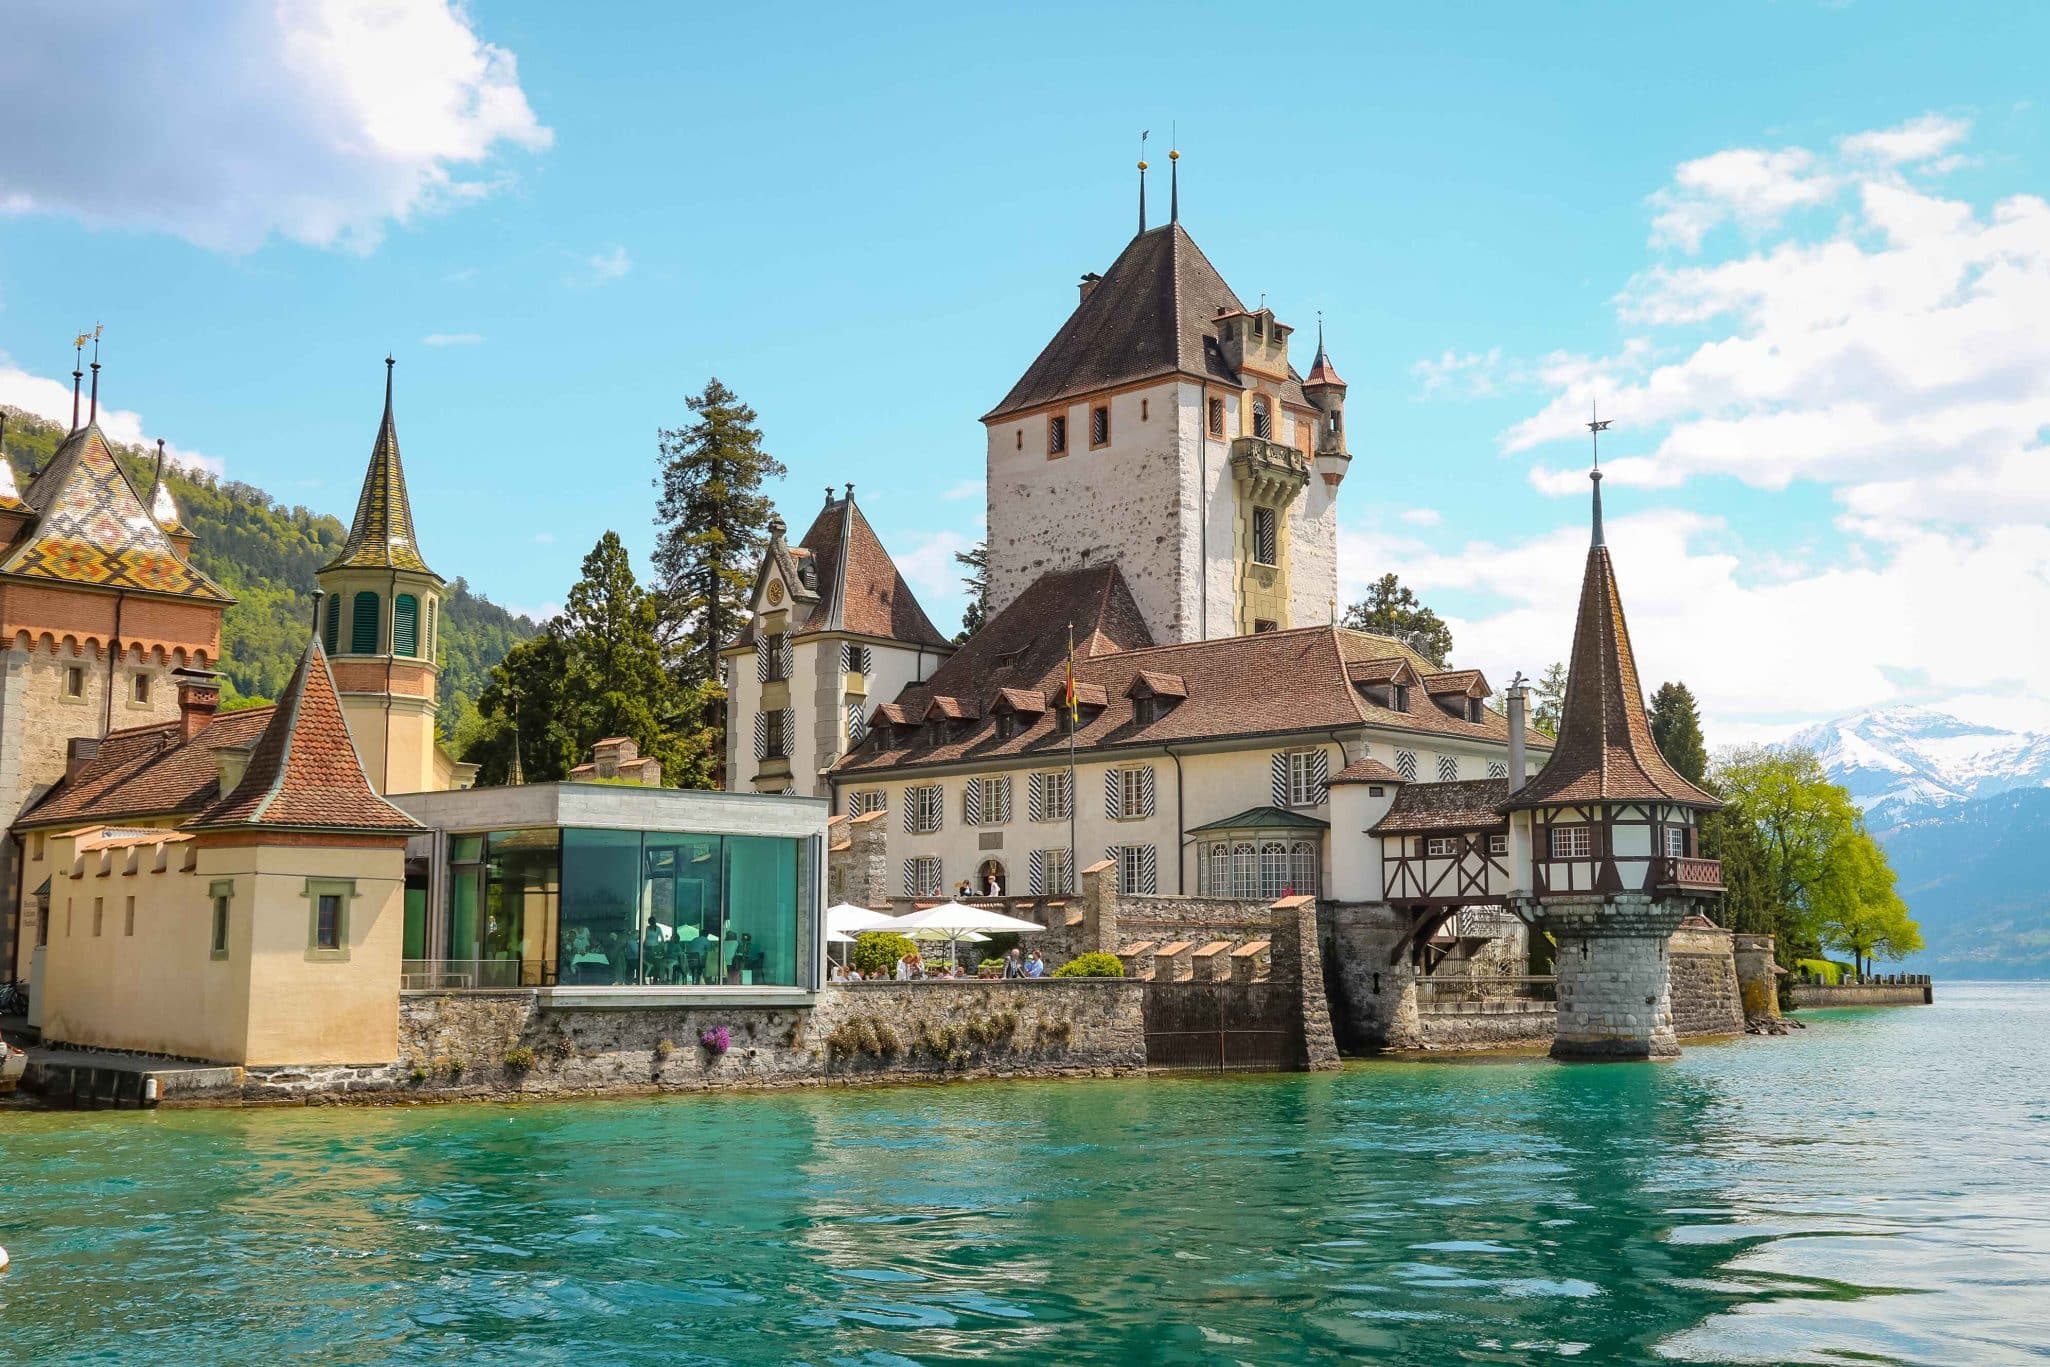 How to visit the beautiful Oberhofen castle in Switzerland